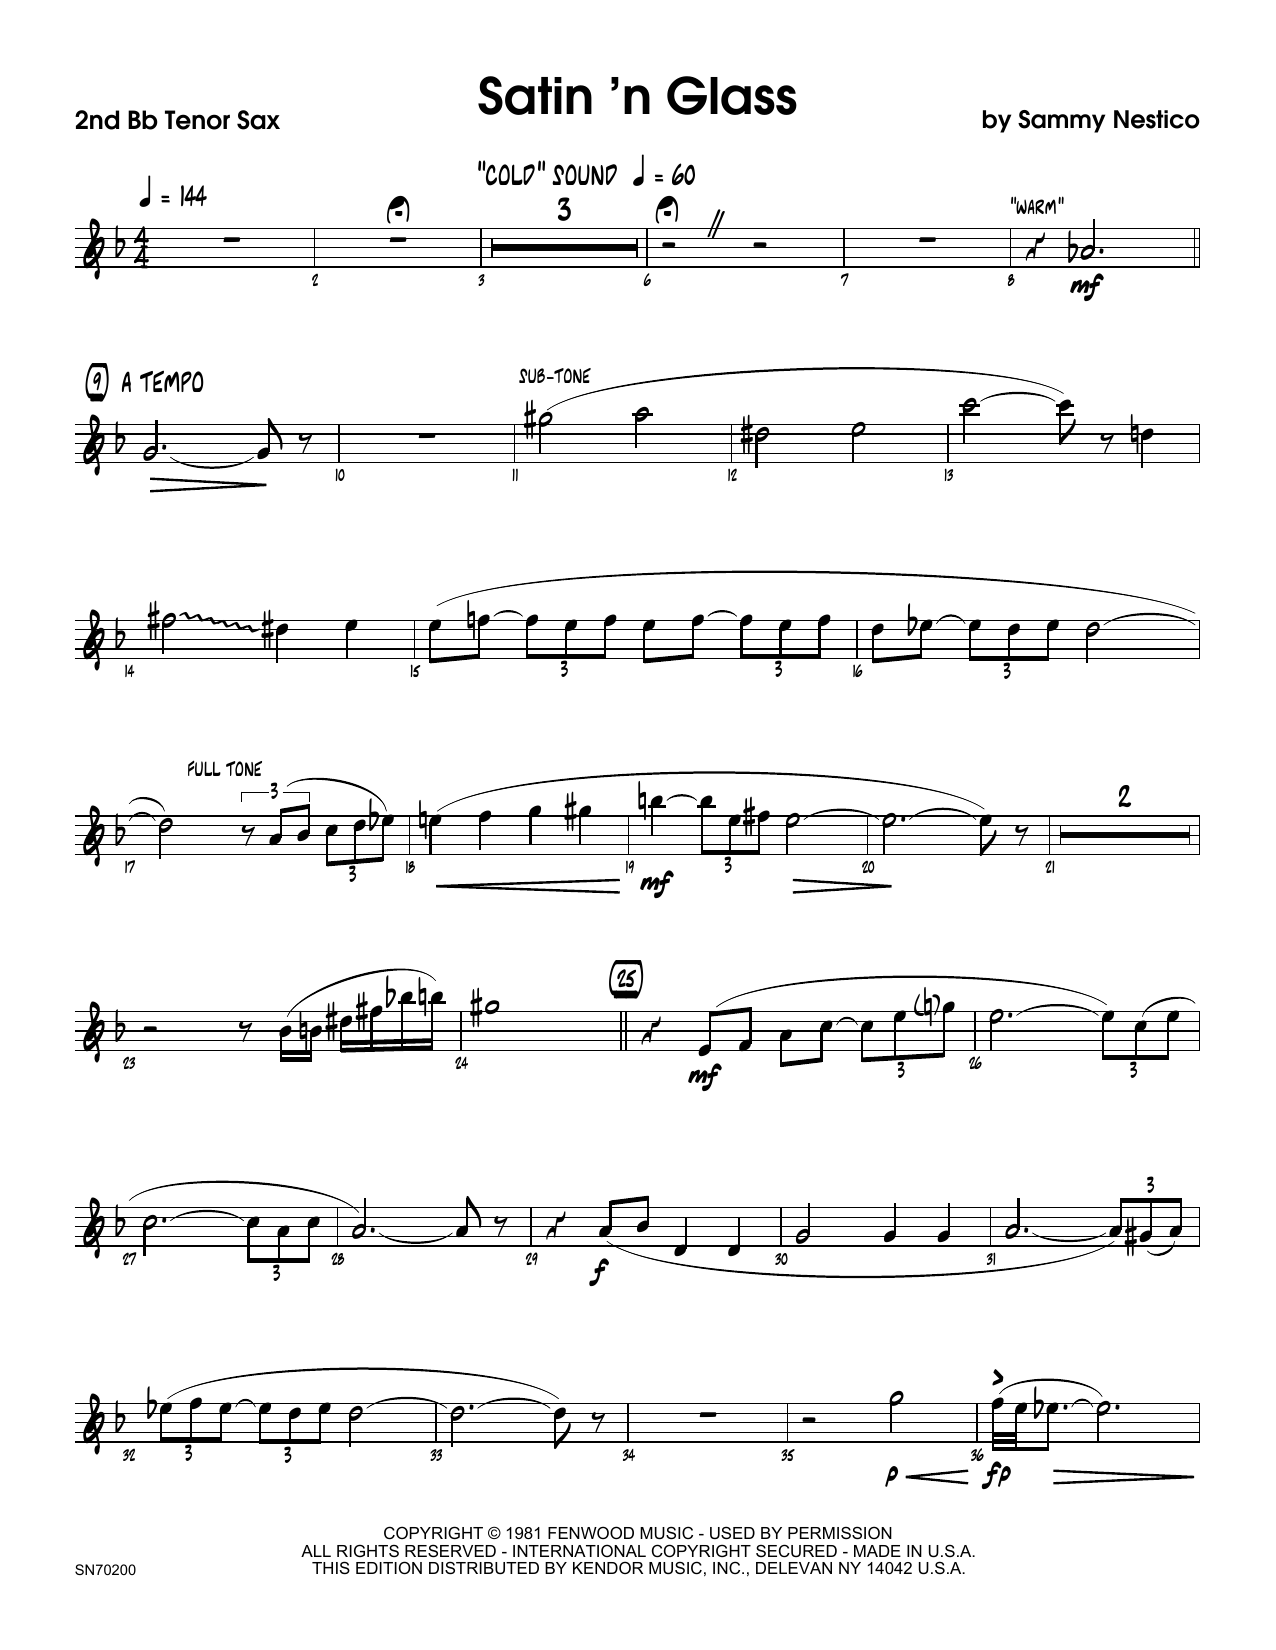 Download Sammy Nestico Satin 'n Glass - 2nd Bb Tenor Saxophone Sheet Music